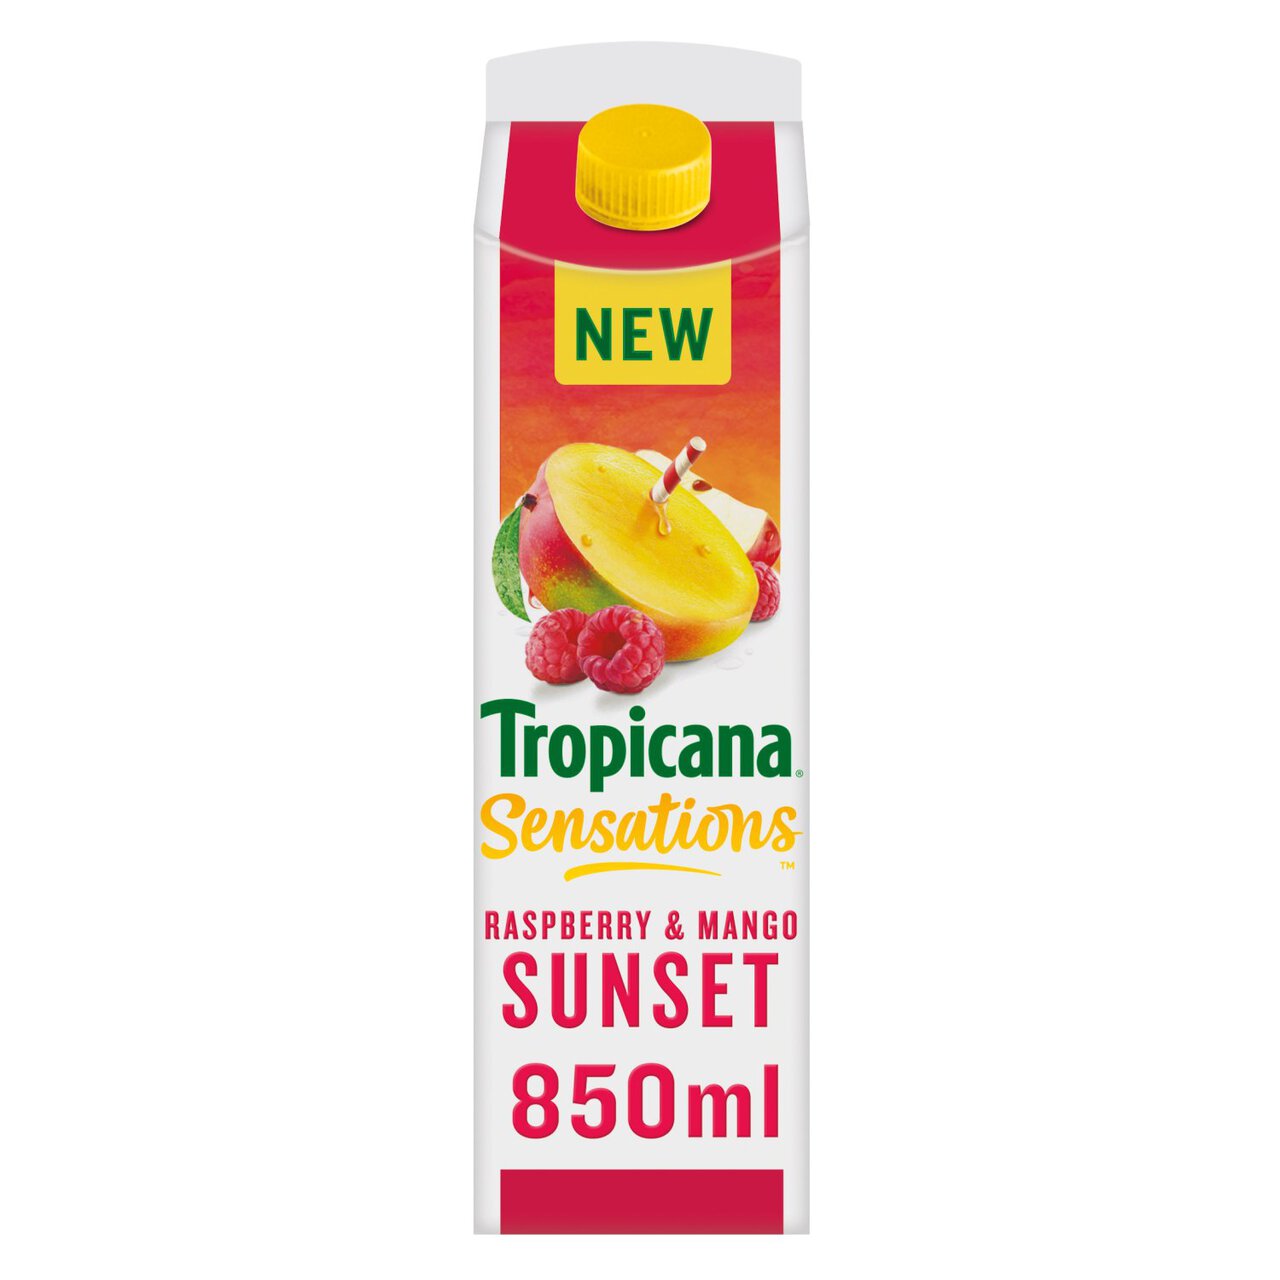 Tropicana Sensations Raspberry & Mango Sunset 850ml